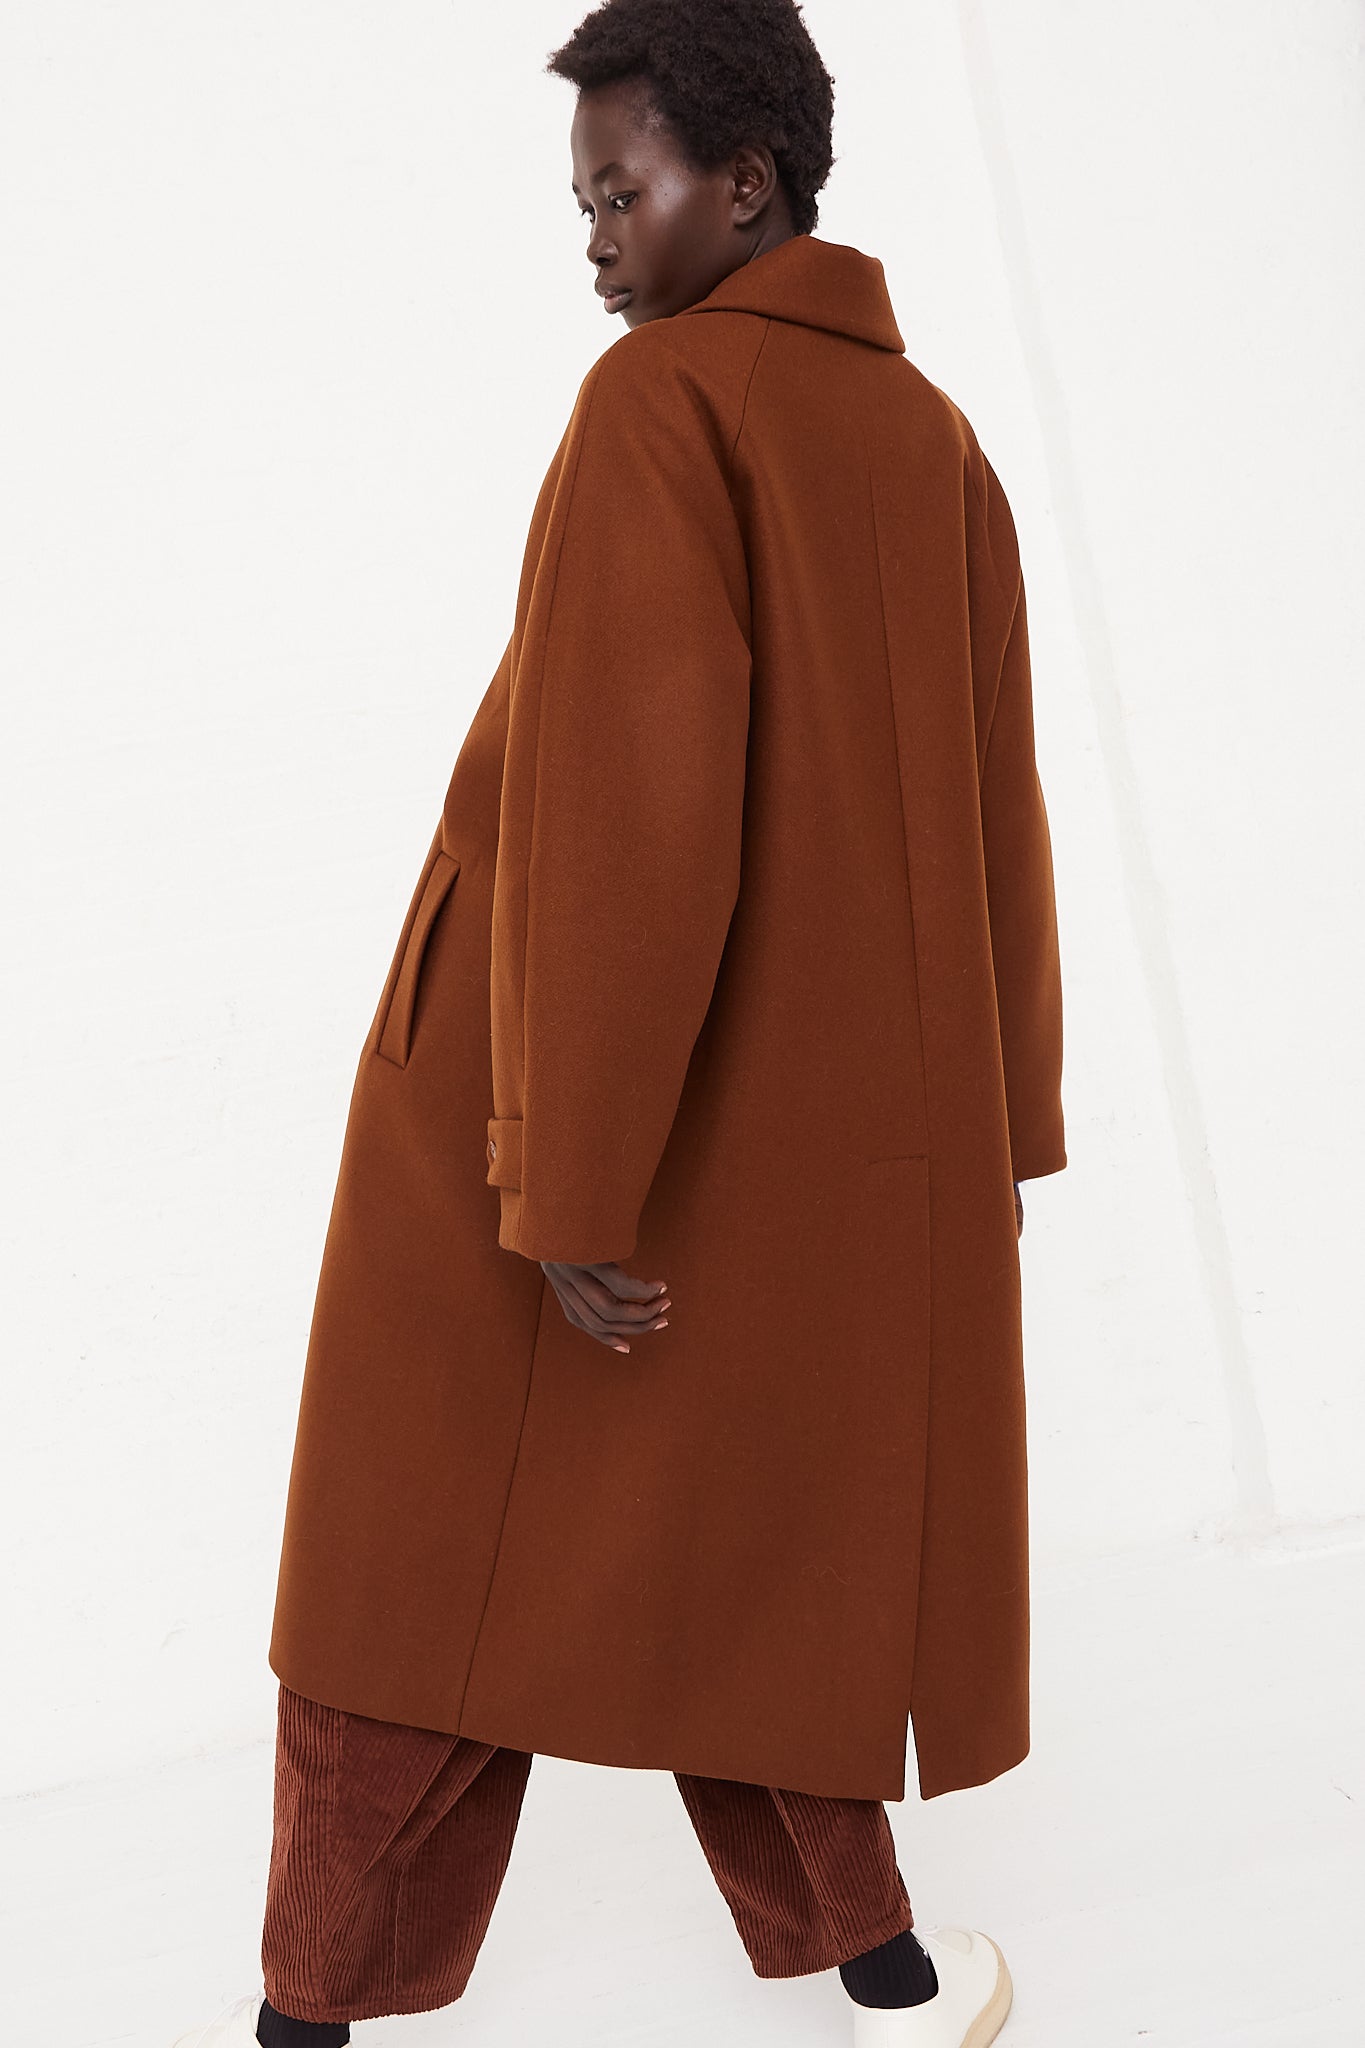 CORDERA Wool Coat Camel | Oroboro Store | Back image of coat full length view showing back of coat details on model